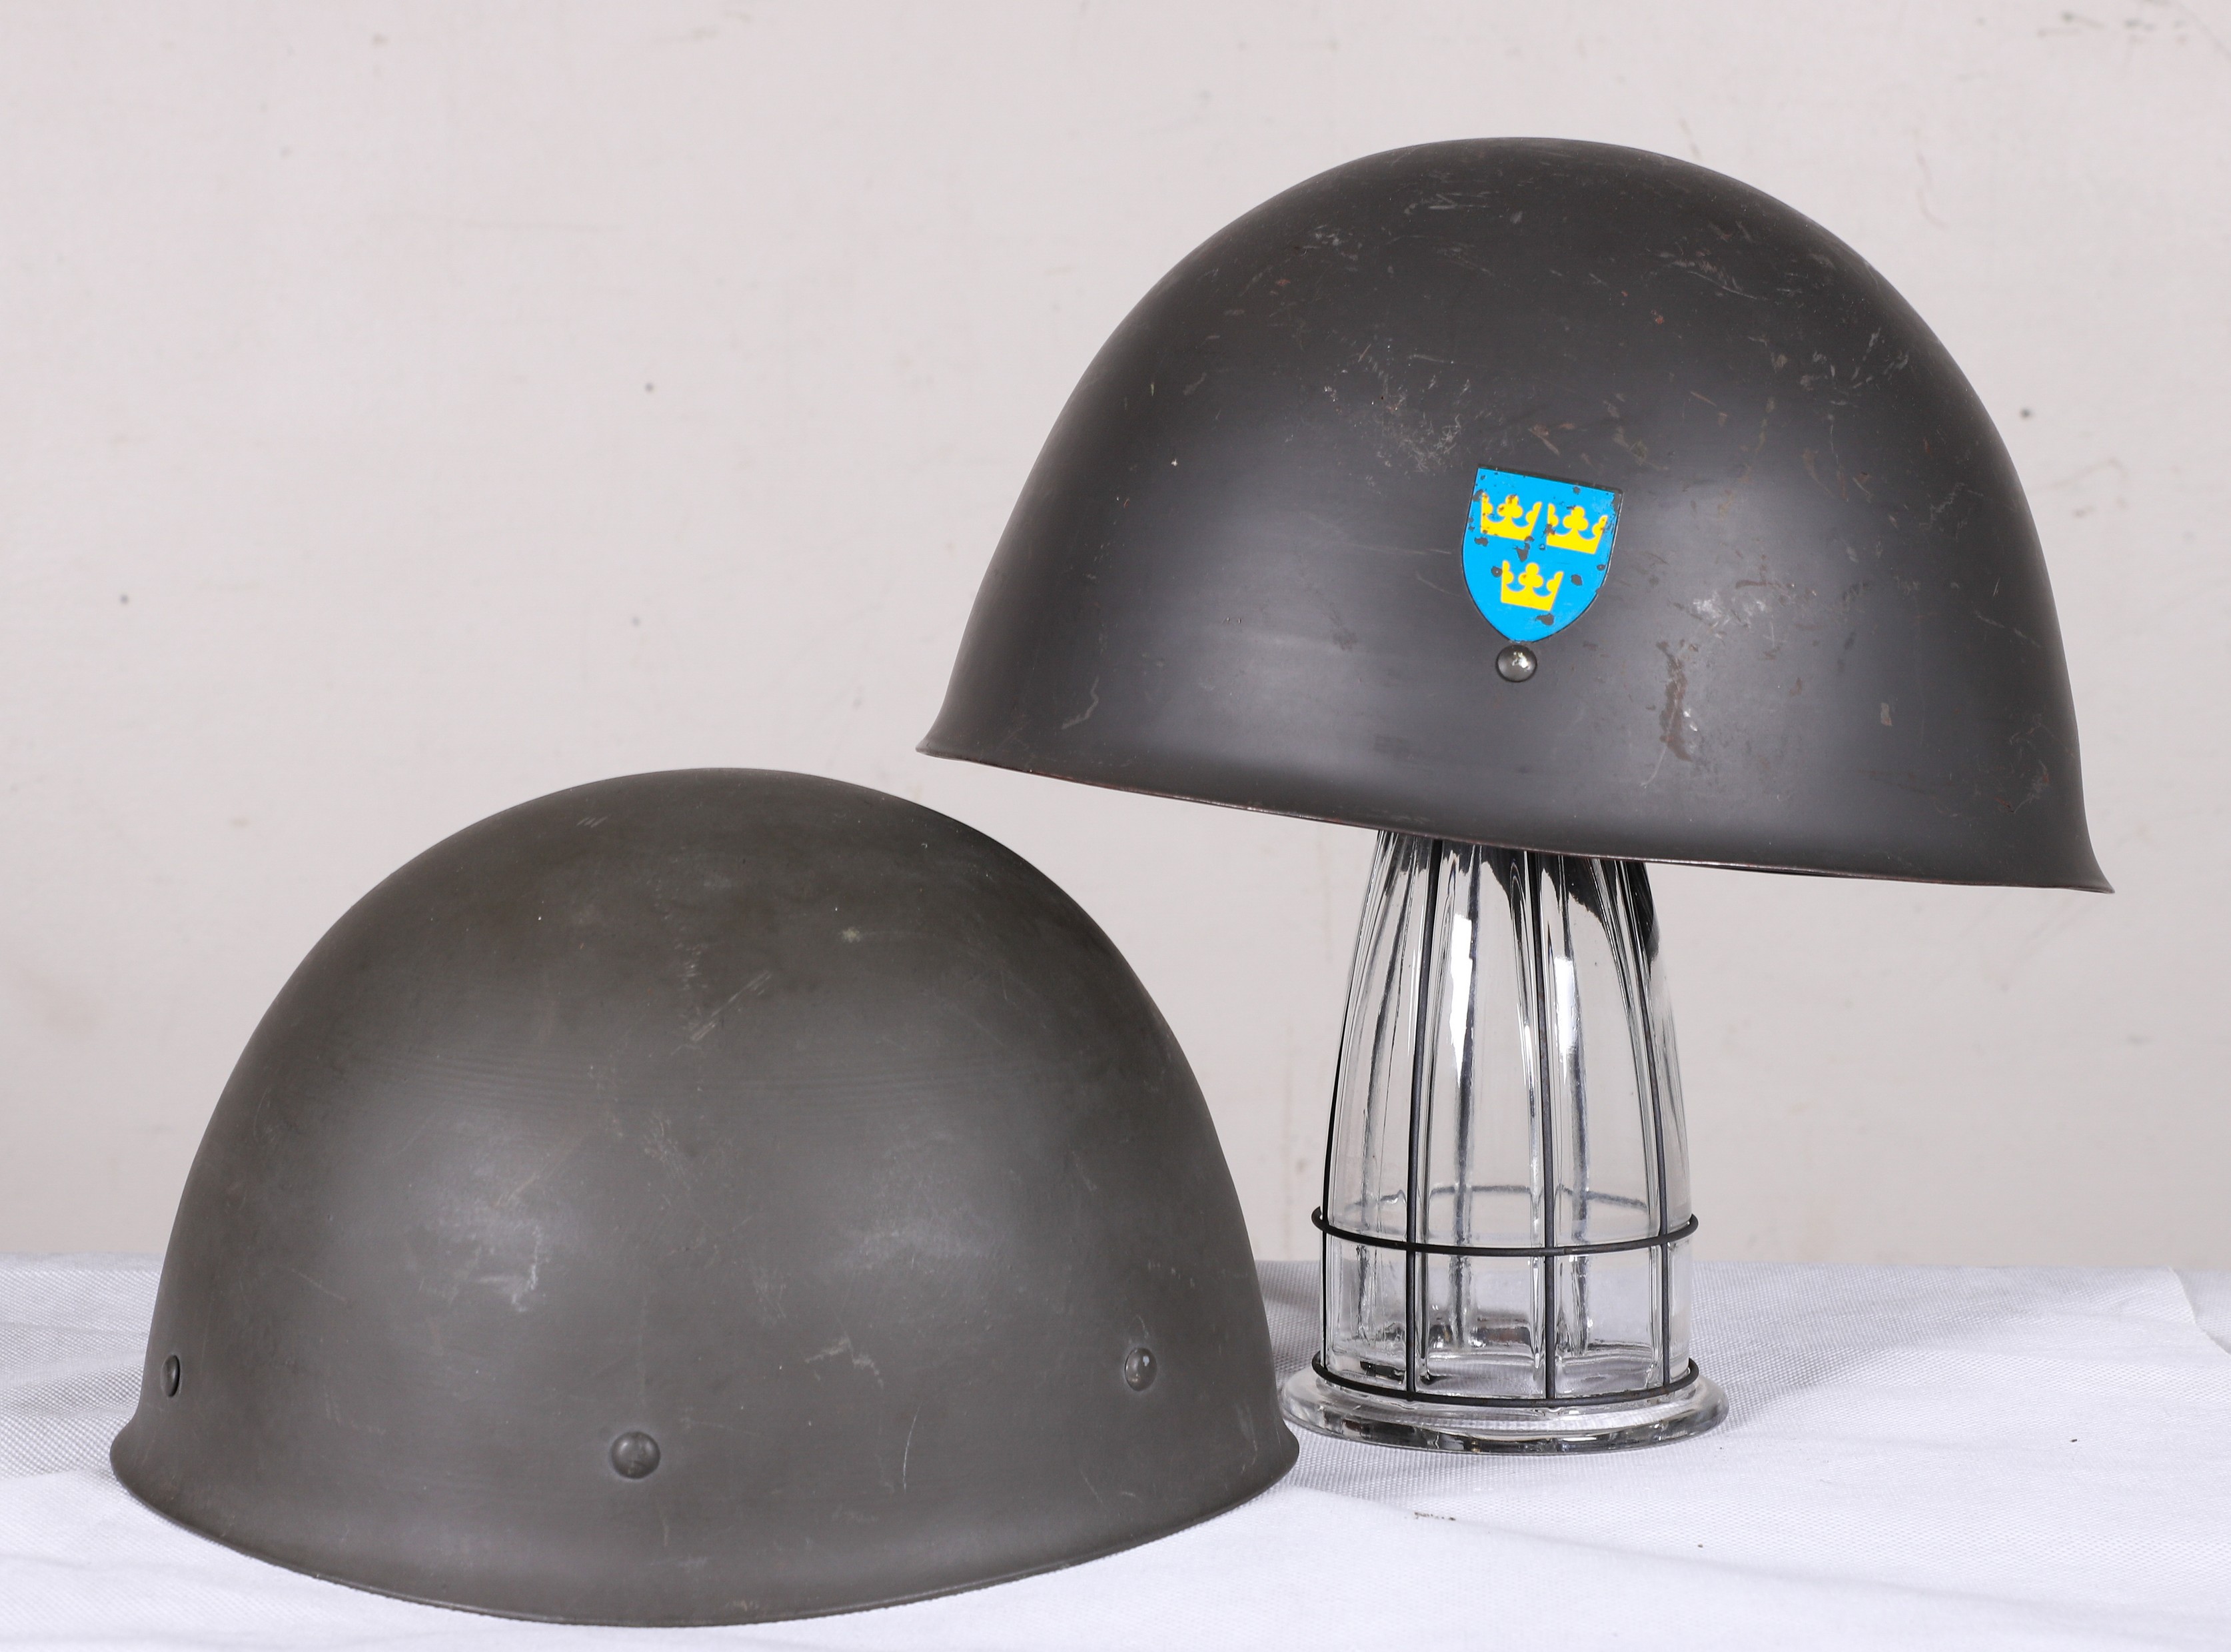  2 Swedish military helmets refurbished 27a77b